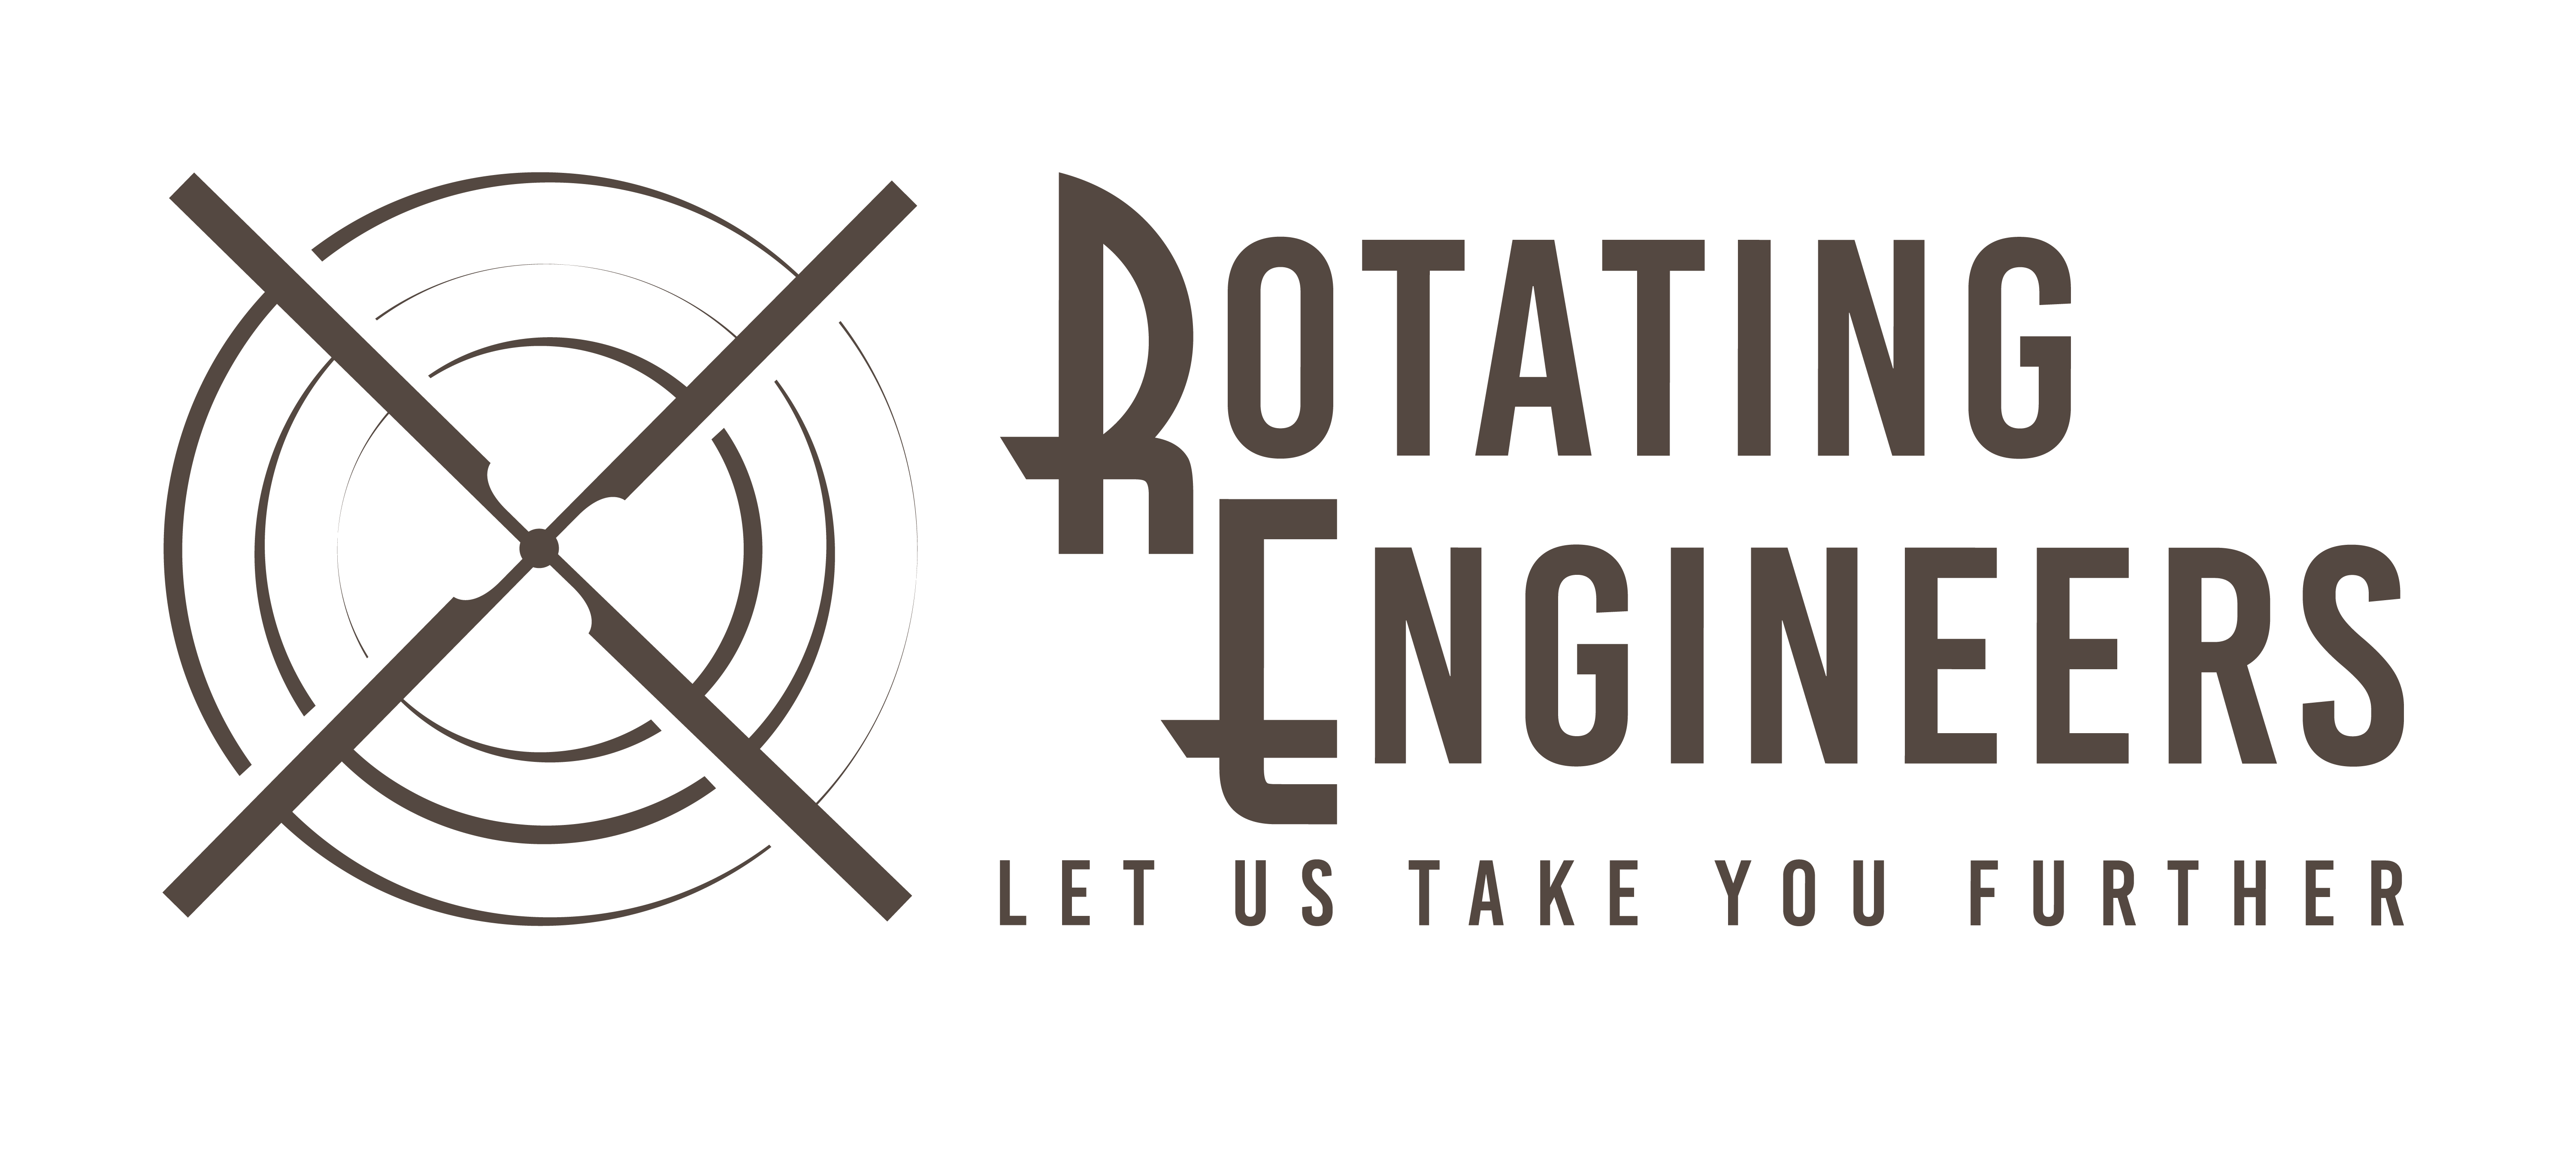 Rotating Engineers